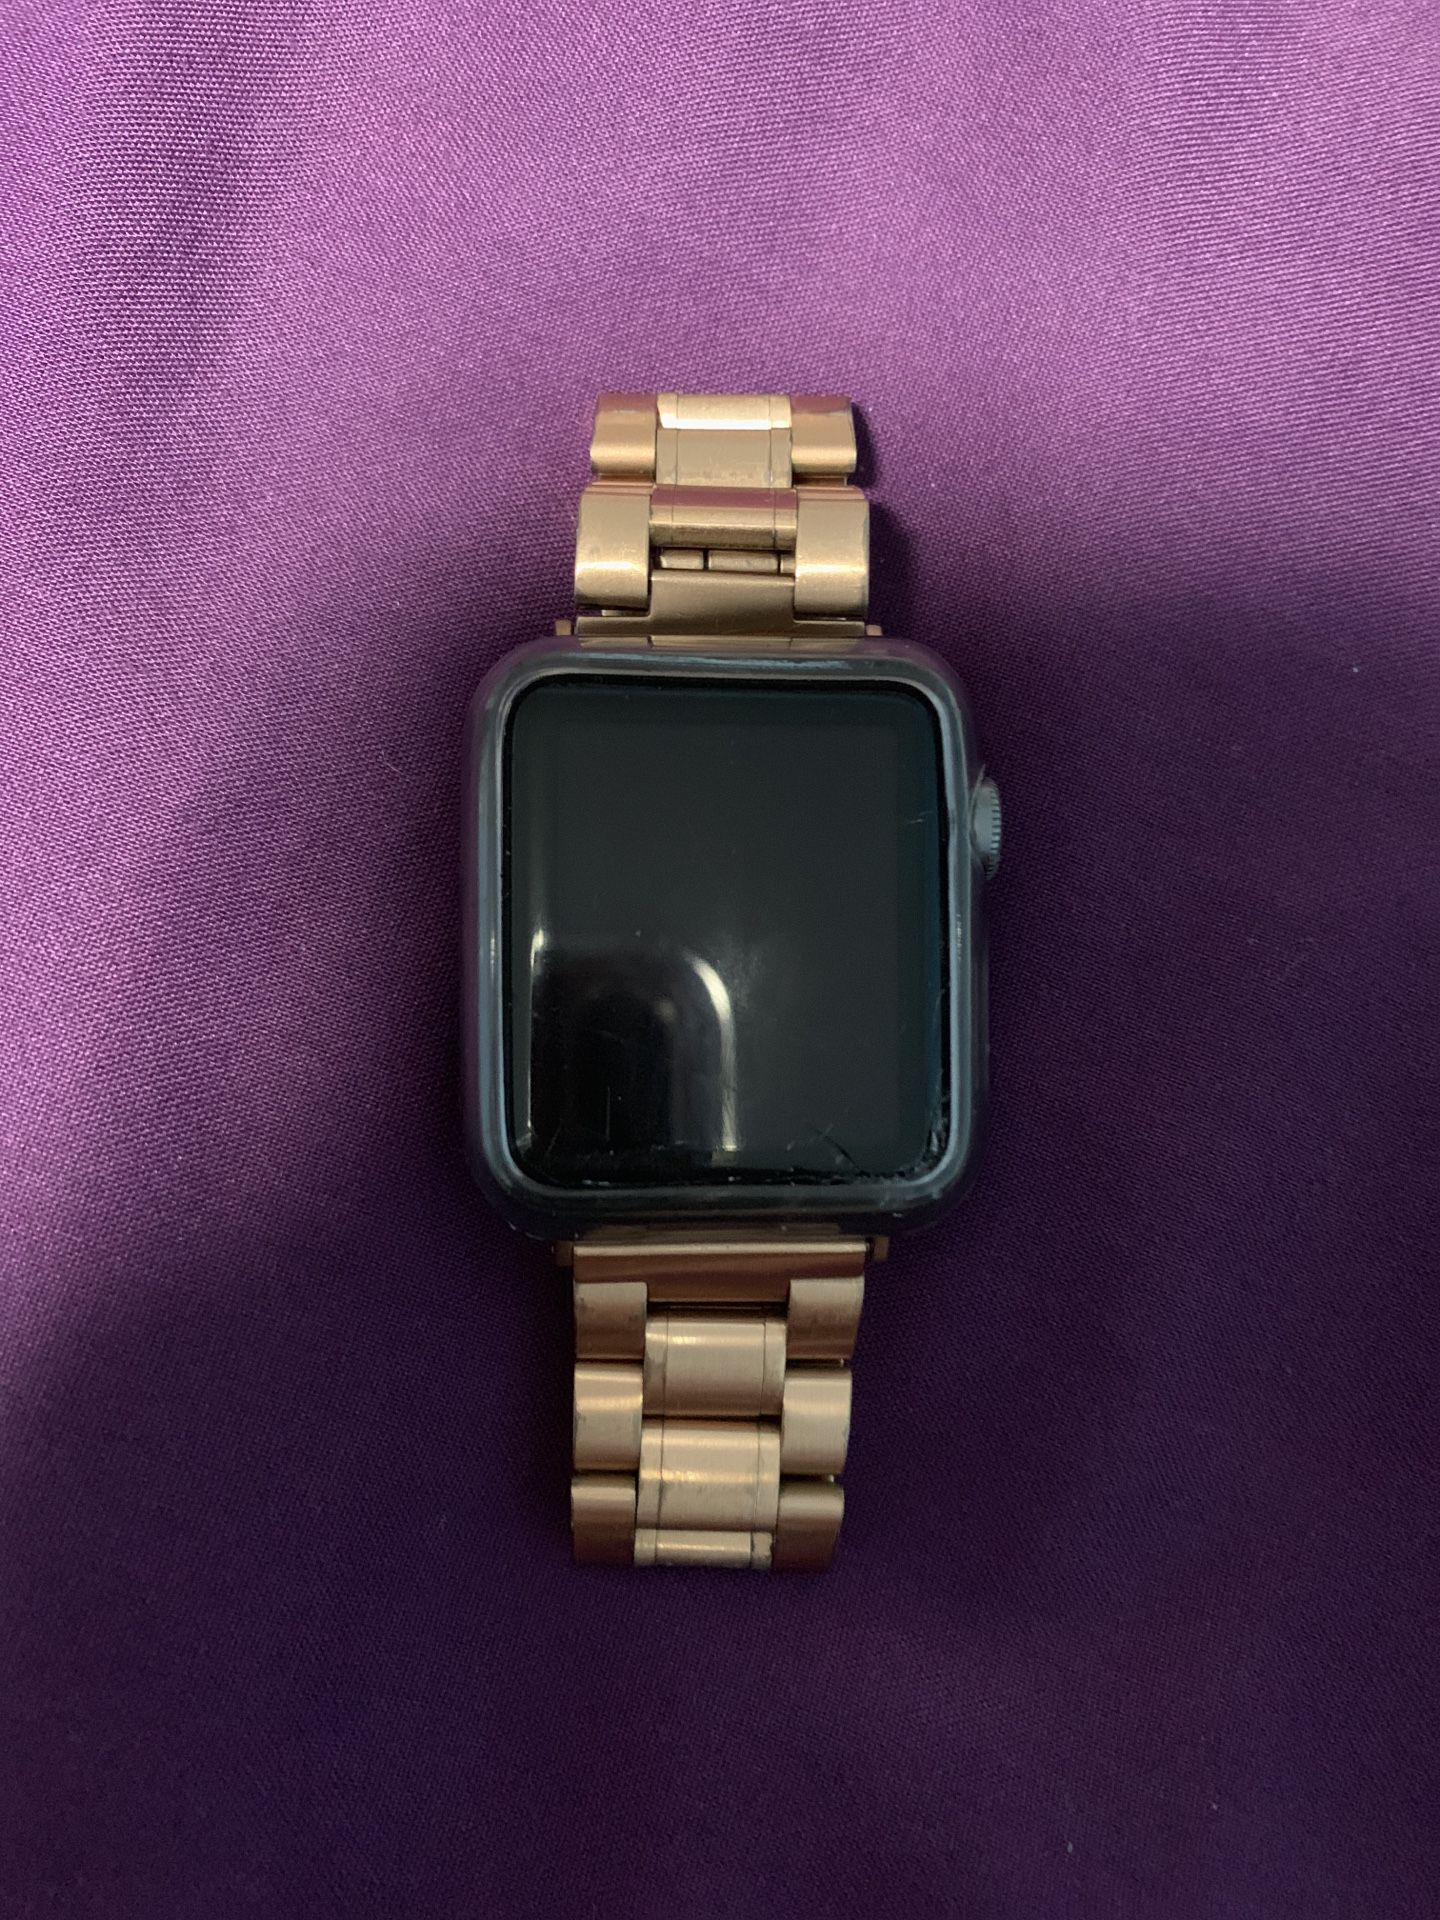 32 mm Series 1 Apple Watch